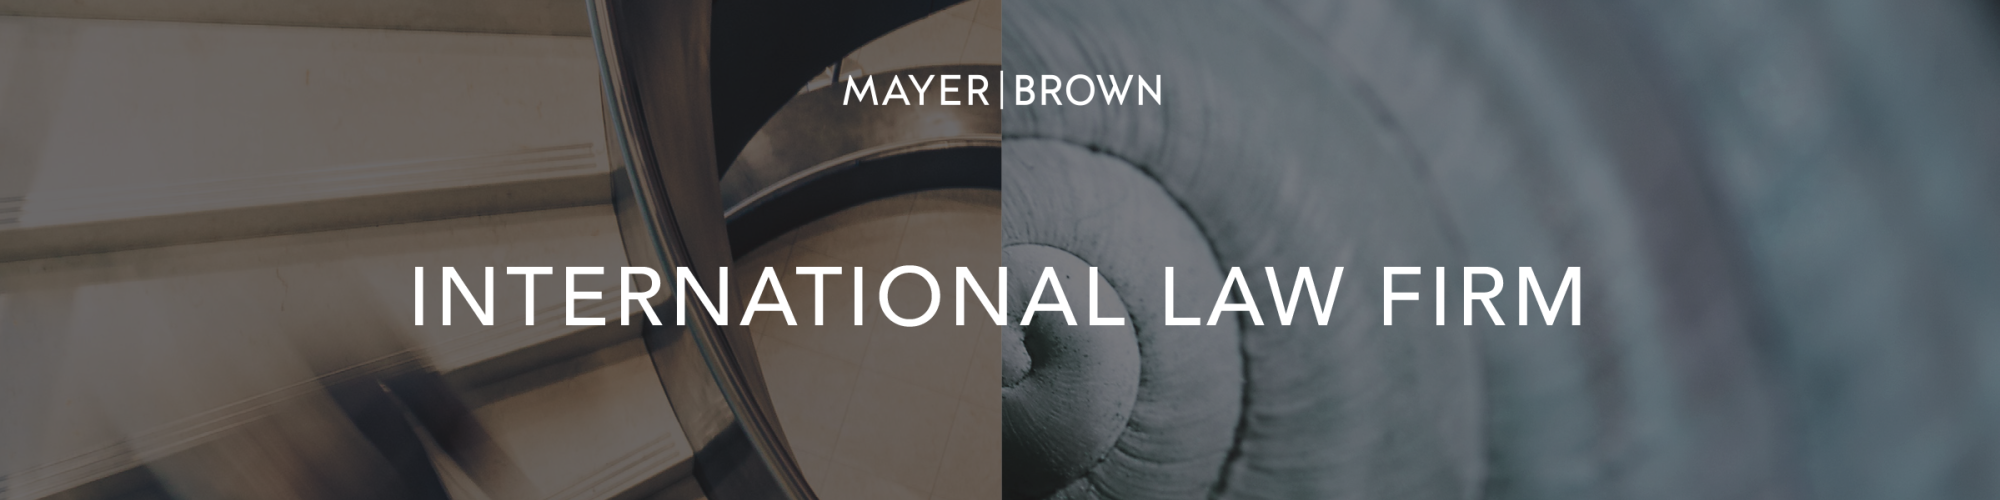 Mayer Brown LLP